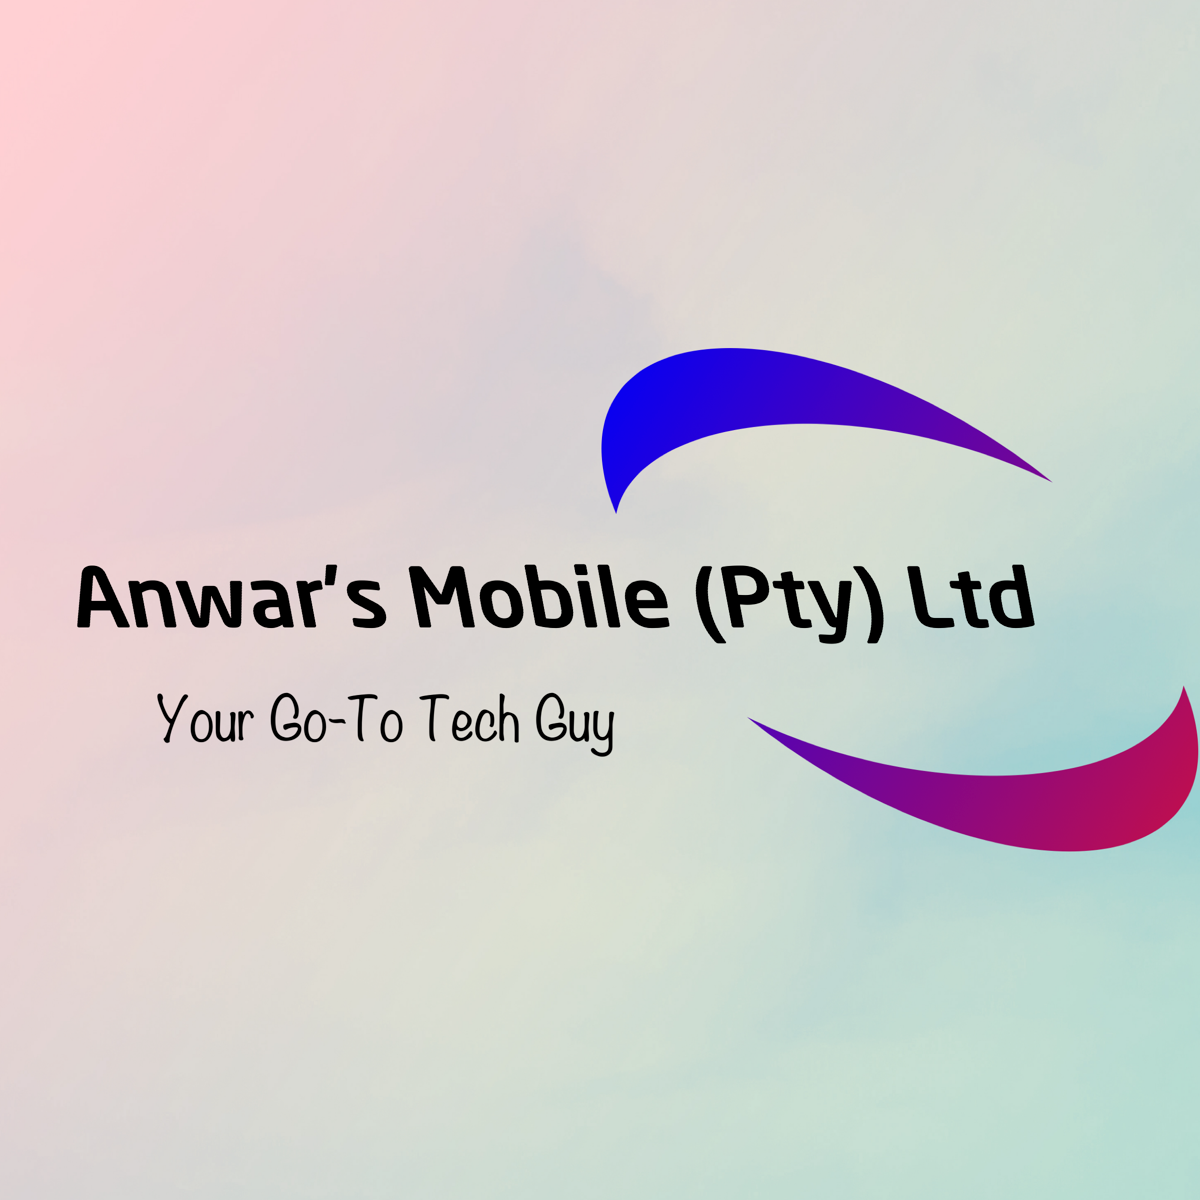 Anwar's Mobile